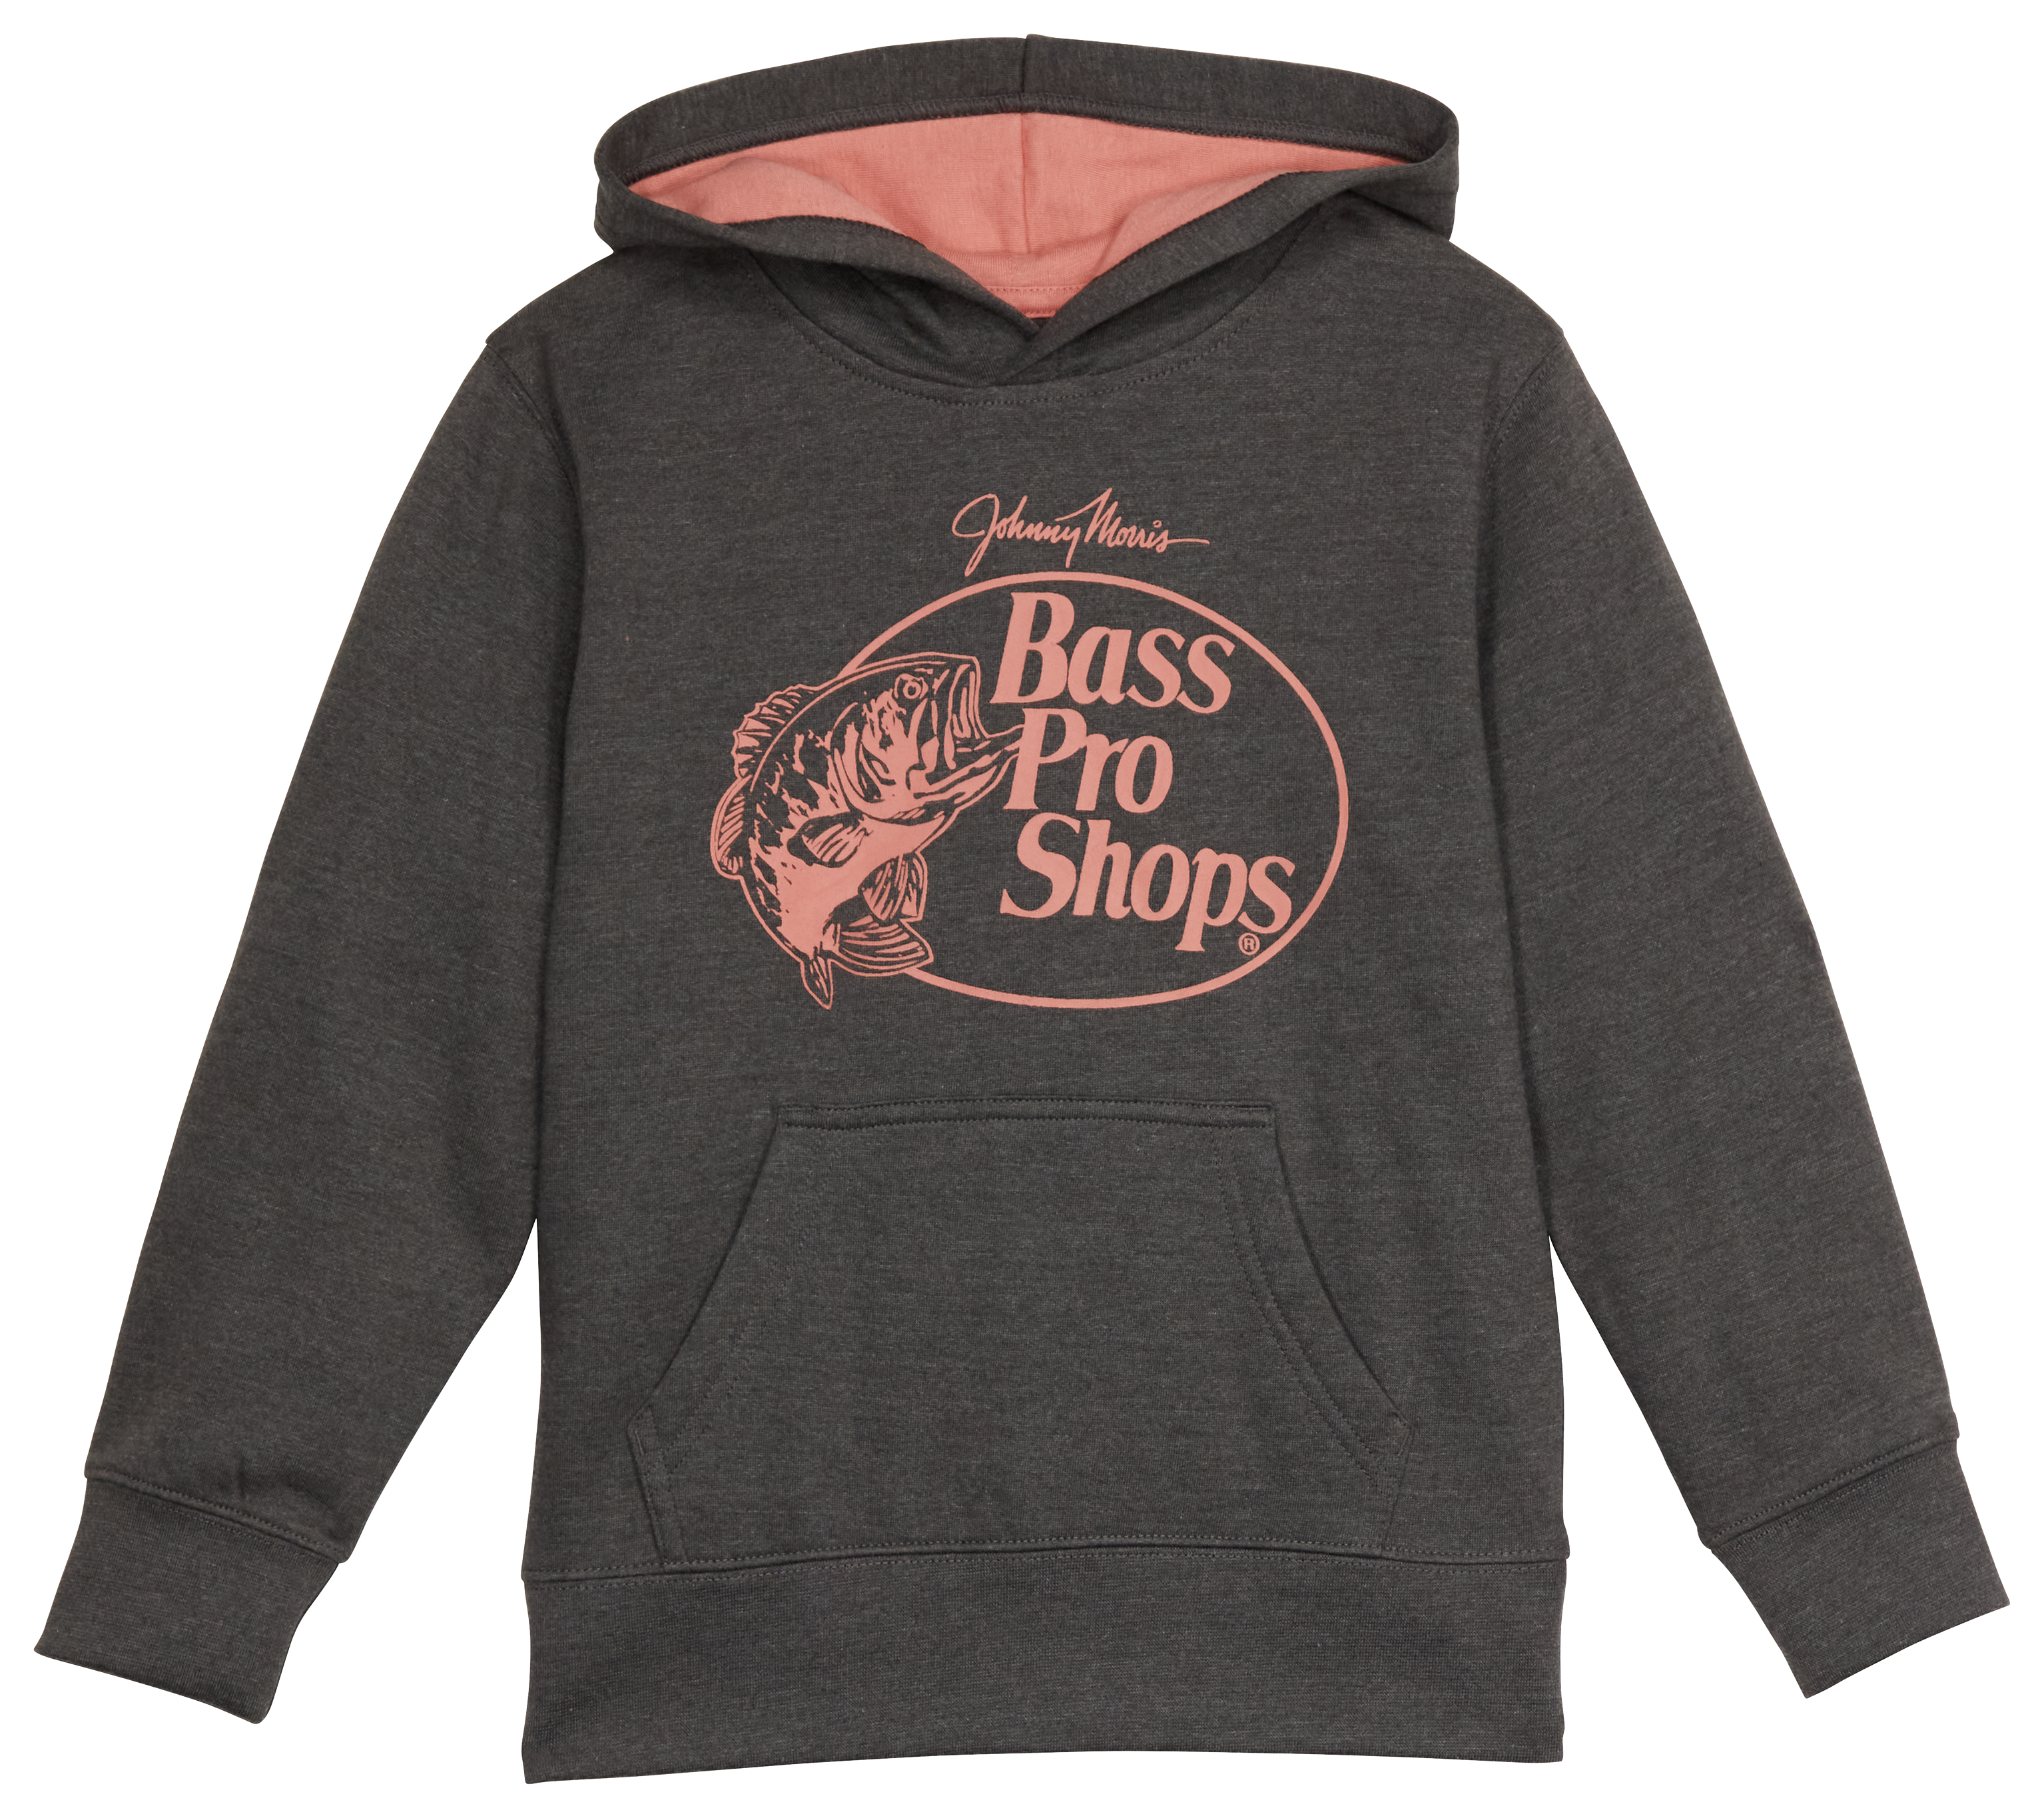 Bass Pro Shops Original Logo Long-Sleeve Hoodie for Kids - Charcoal - L